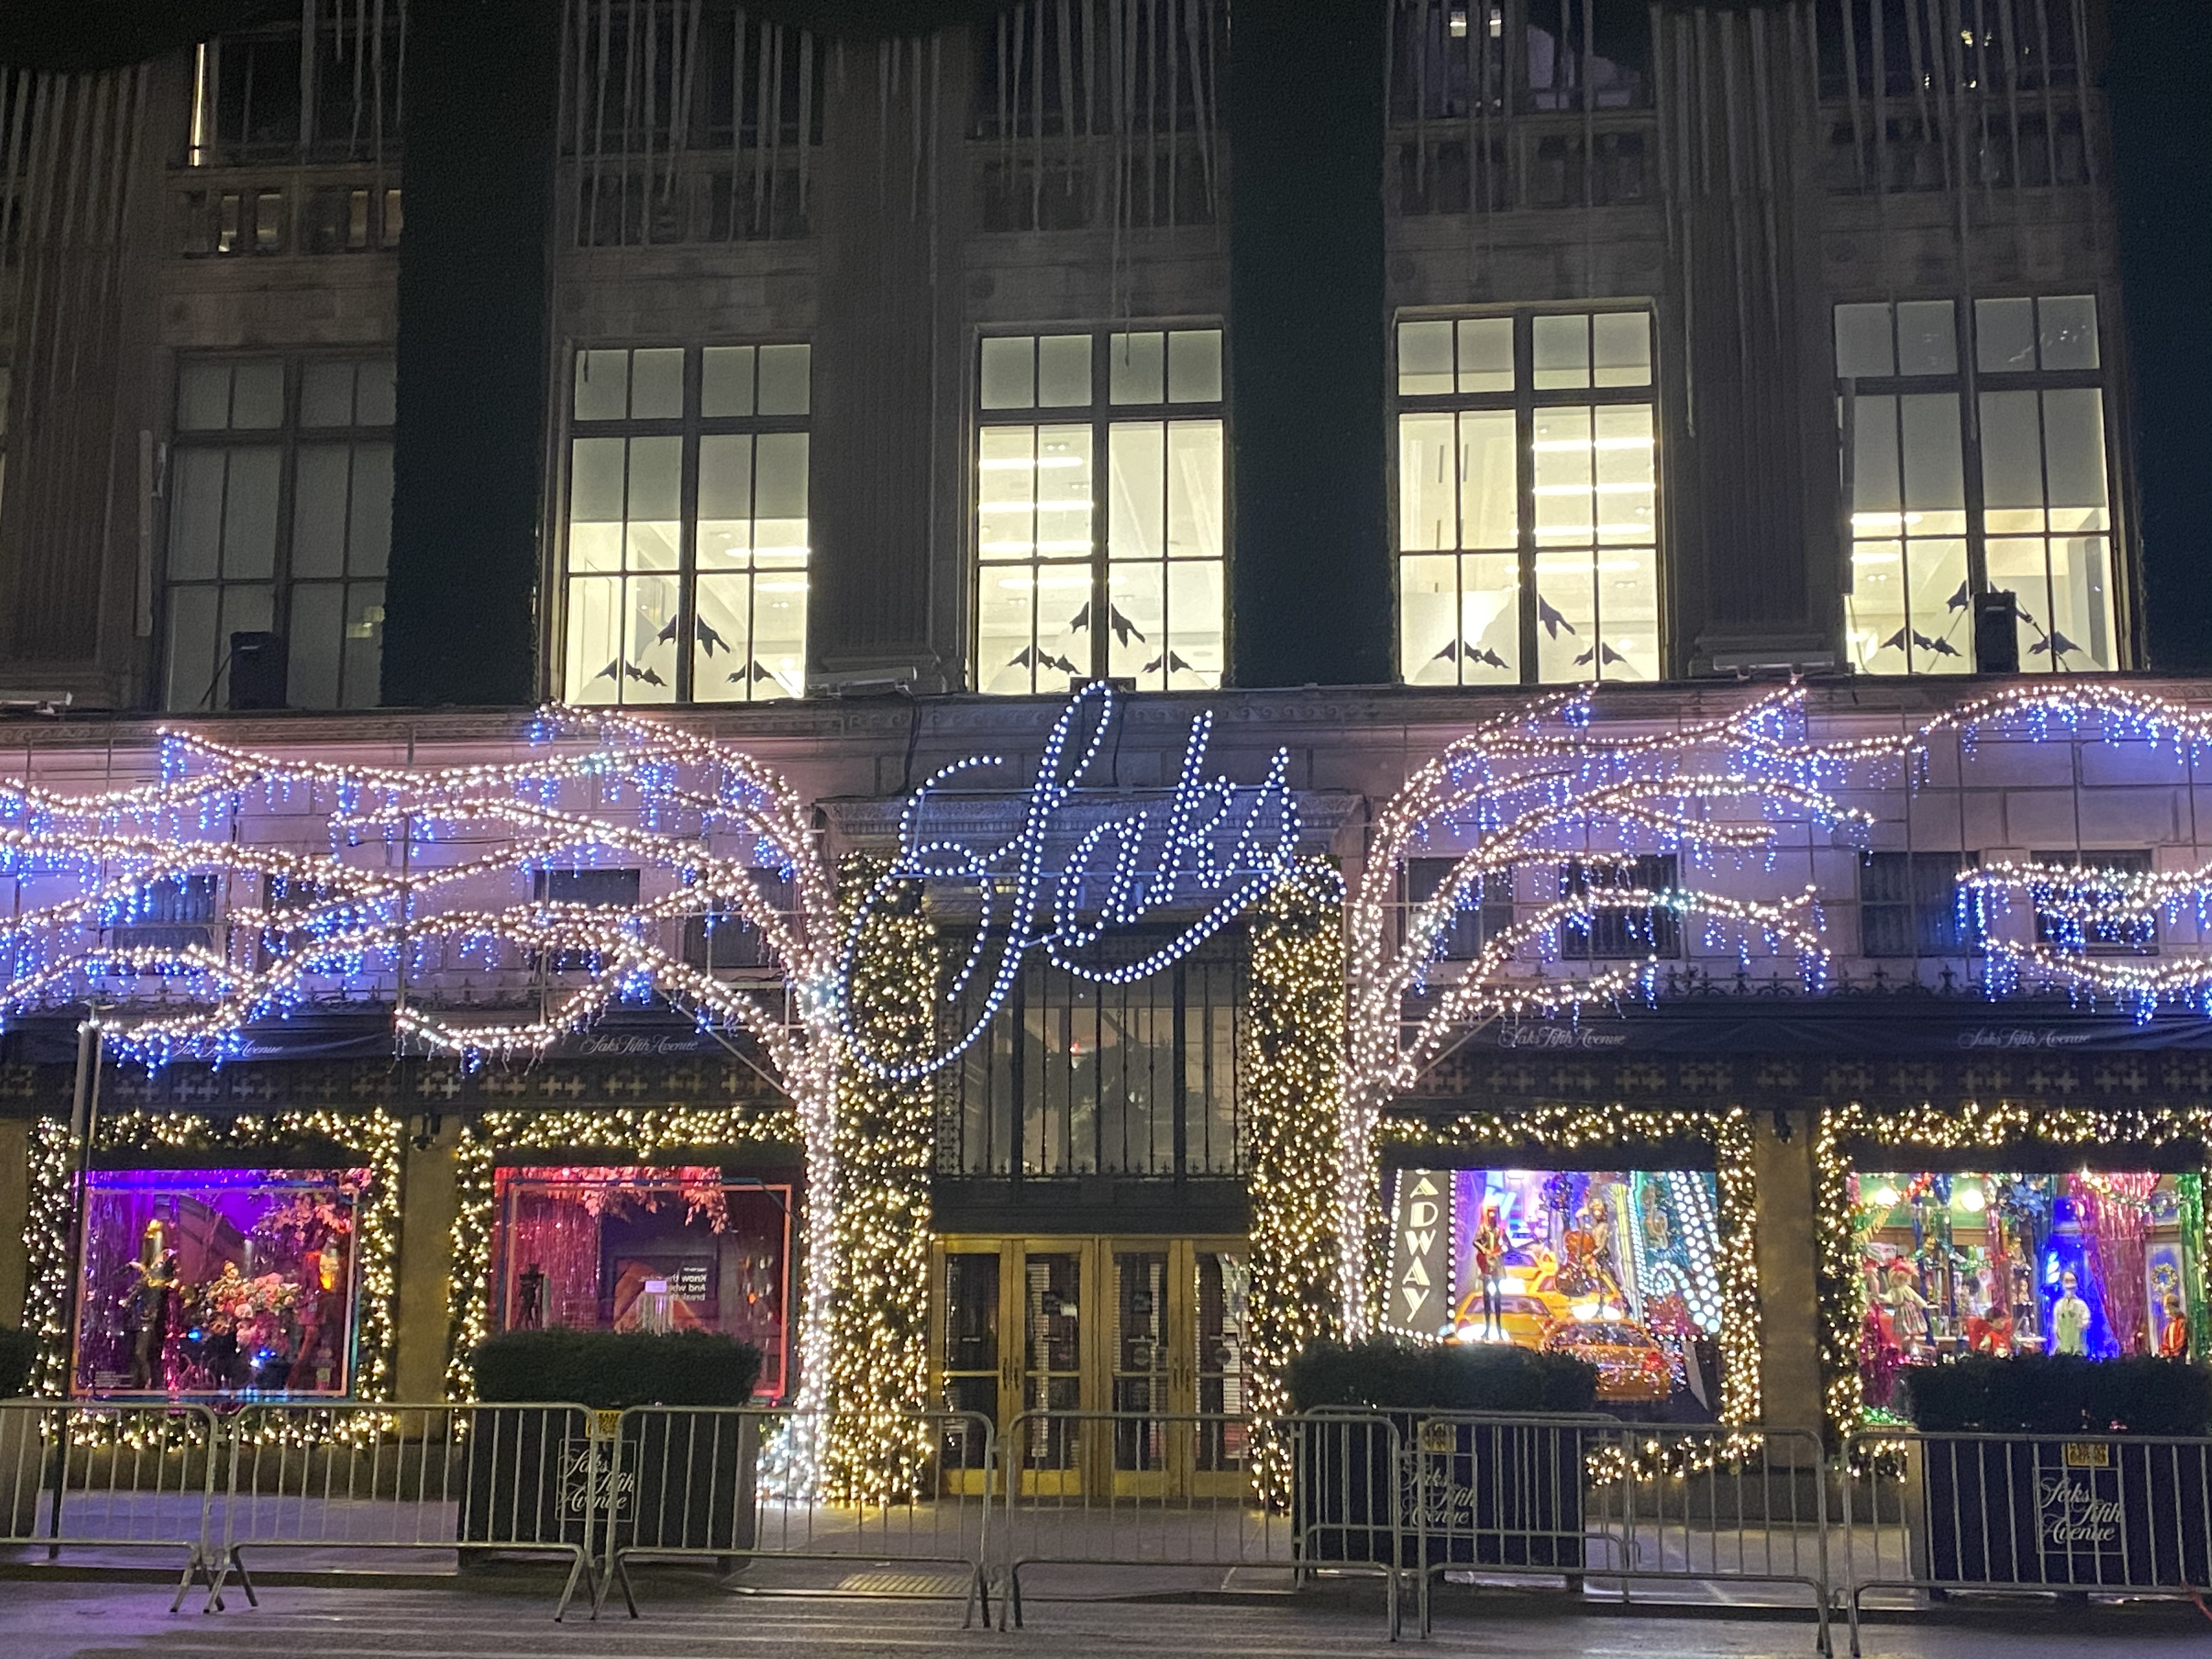 Saks Fifth Avenue's Holiday Windows